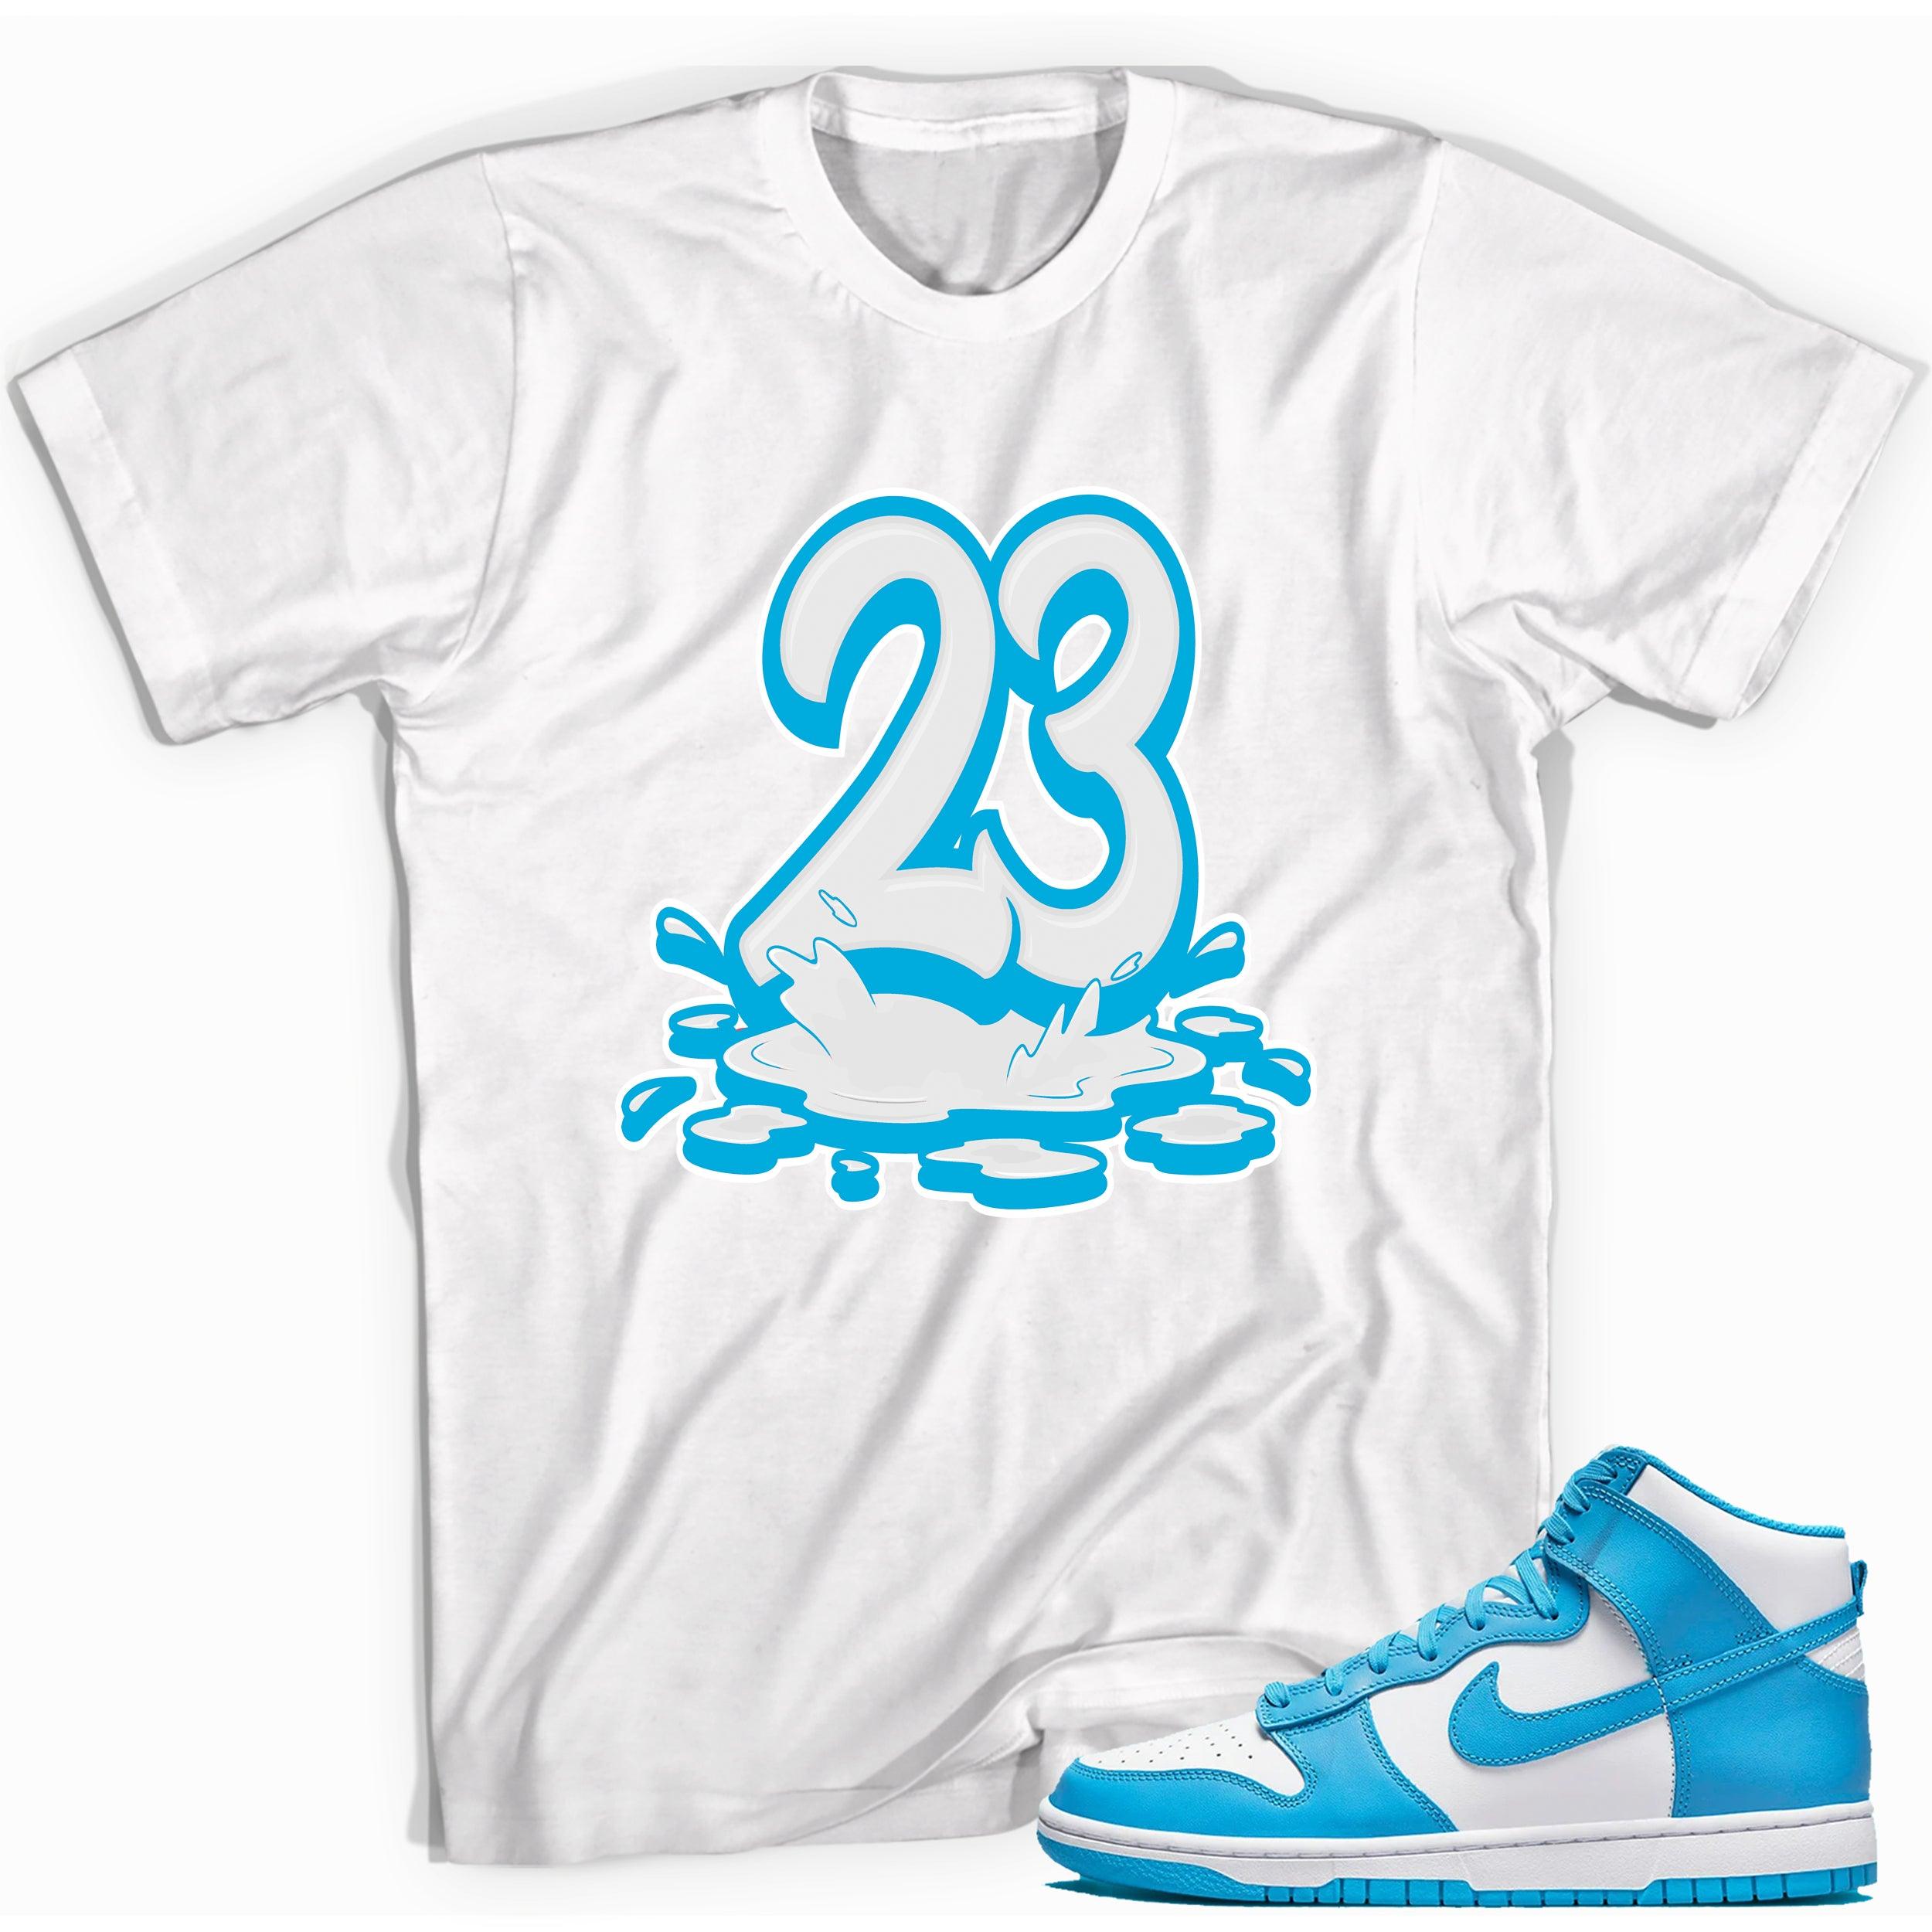 Number 23 Melting Shirt Nike Dunk High Retro Laser Blue photo